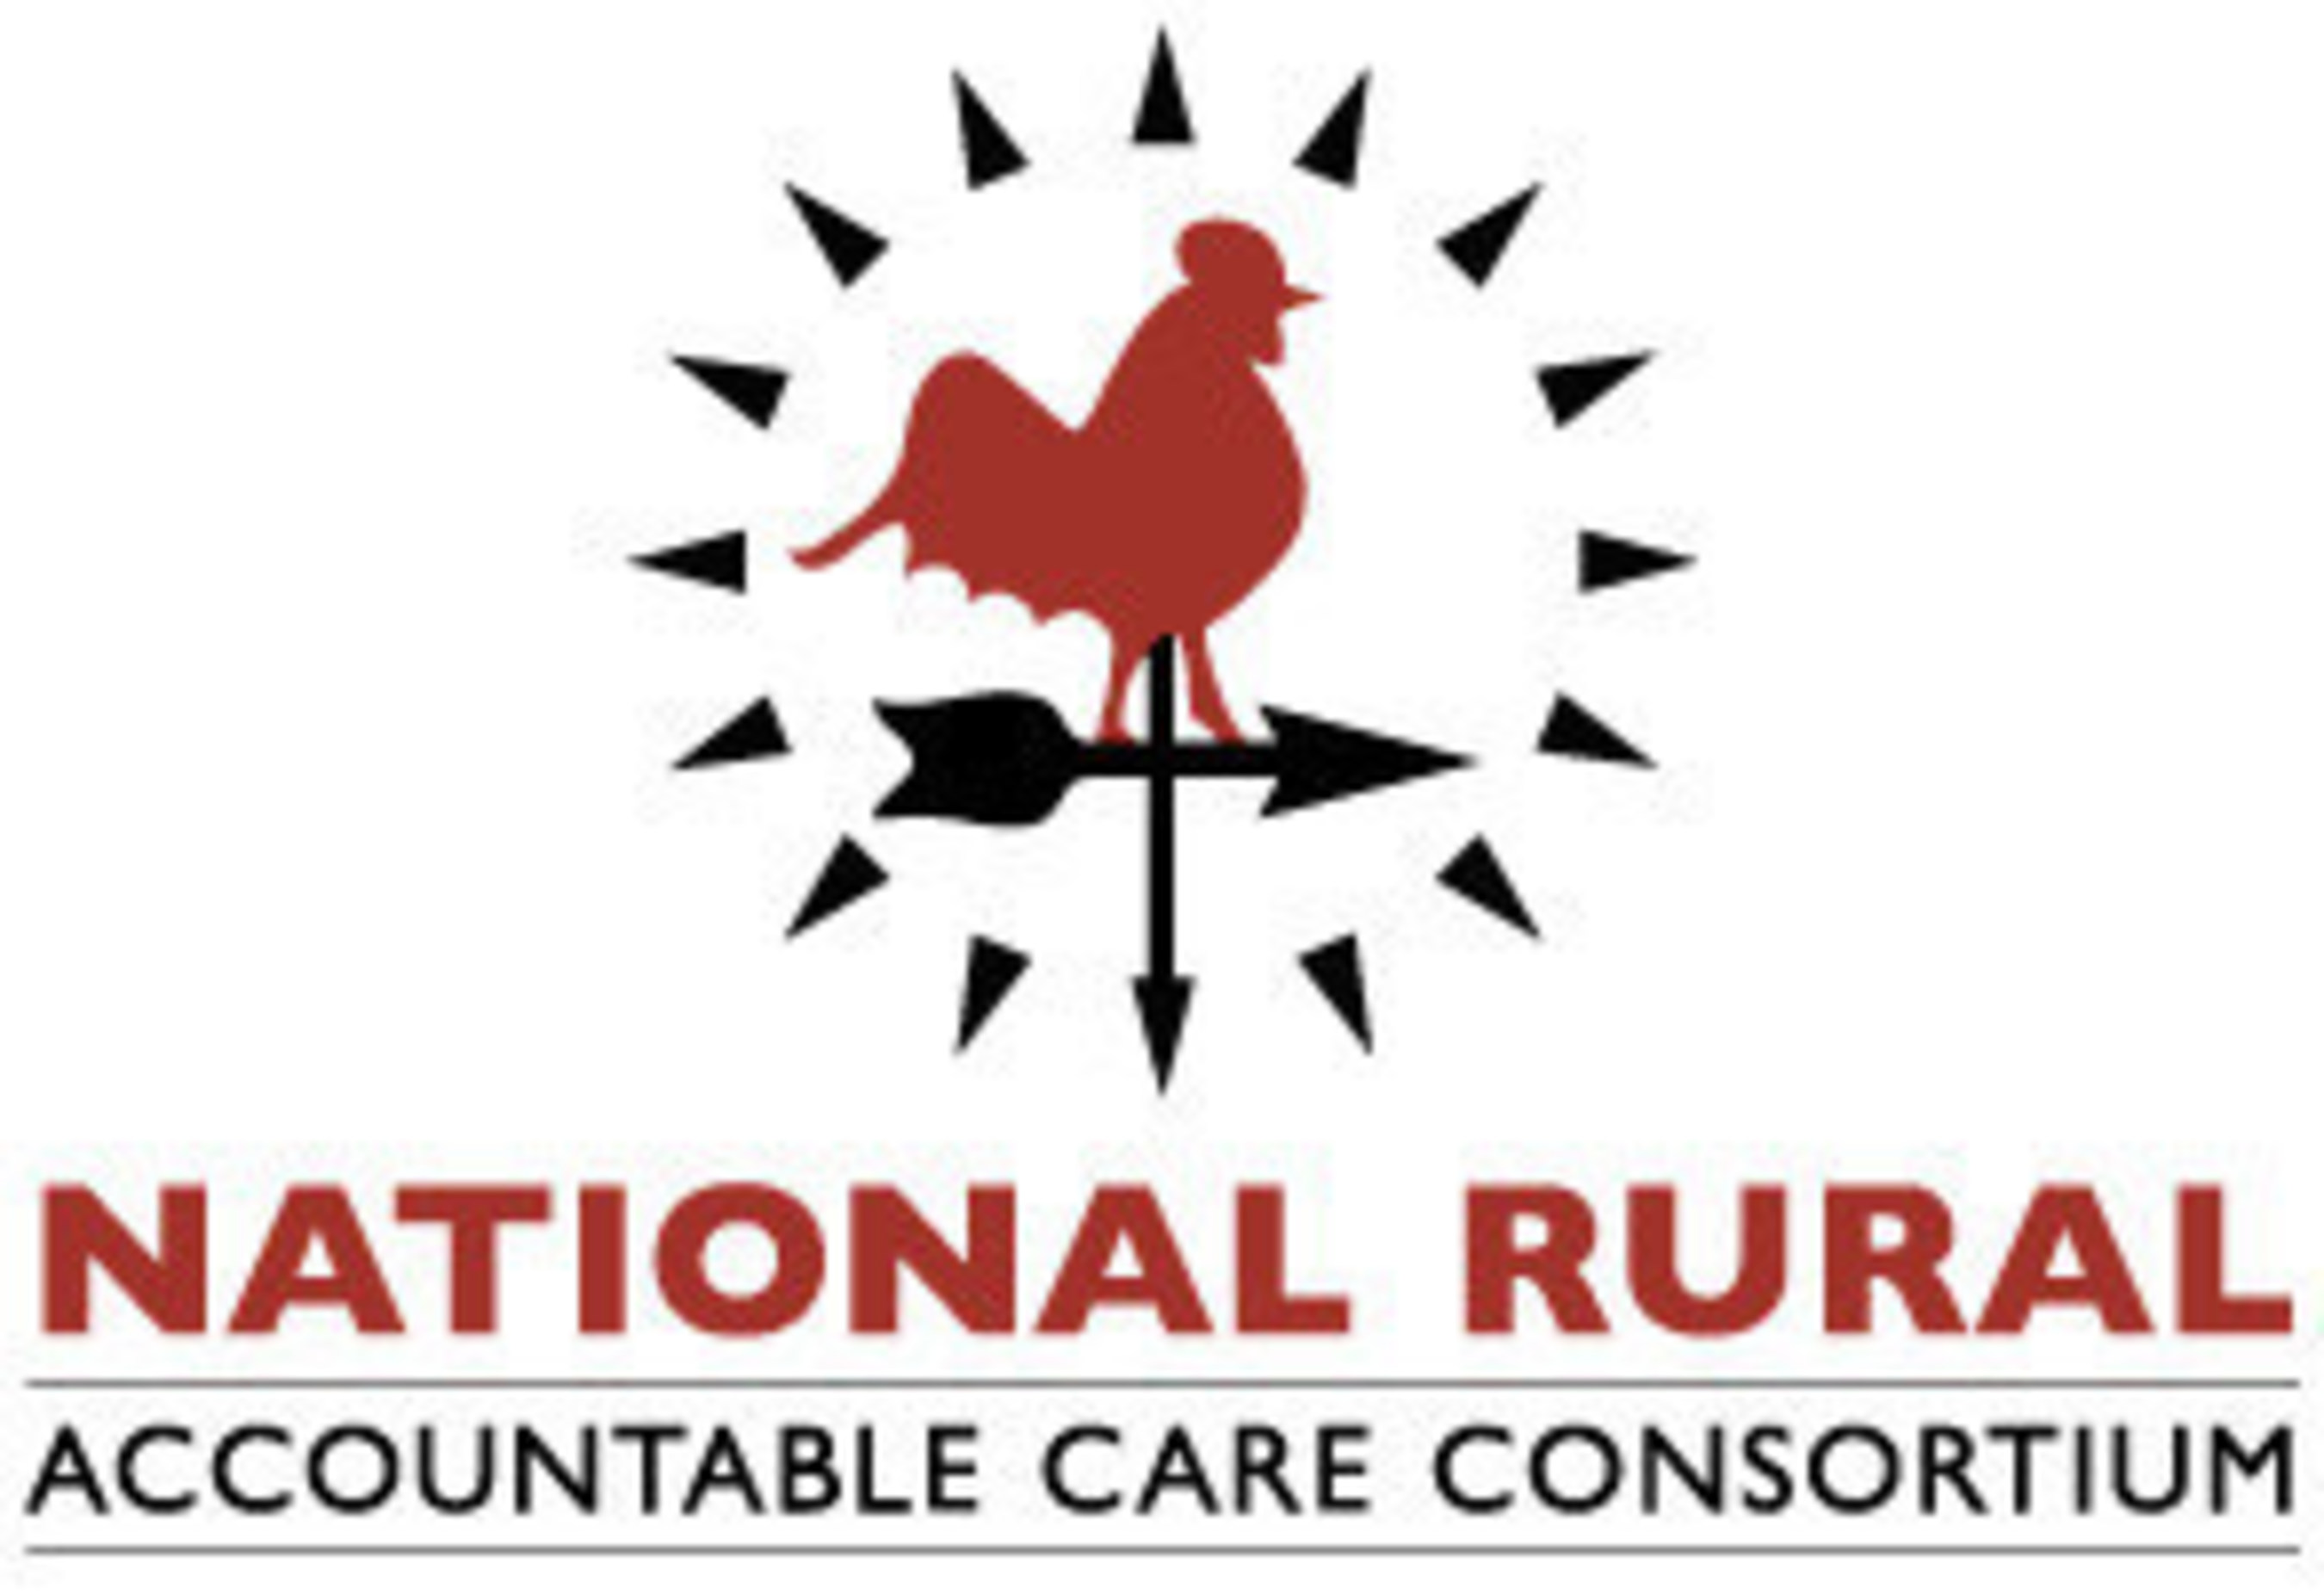 National Rural Accountable Care Consortium (PRNewsFoto/National Rural Accountable Care)